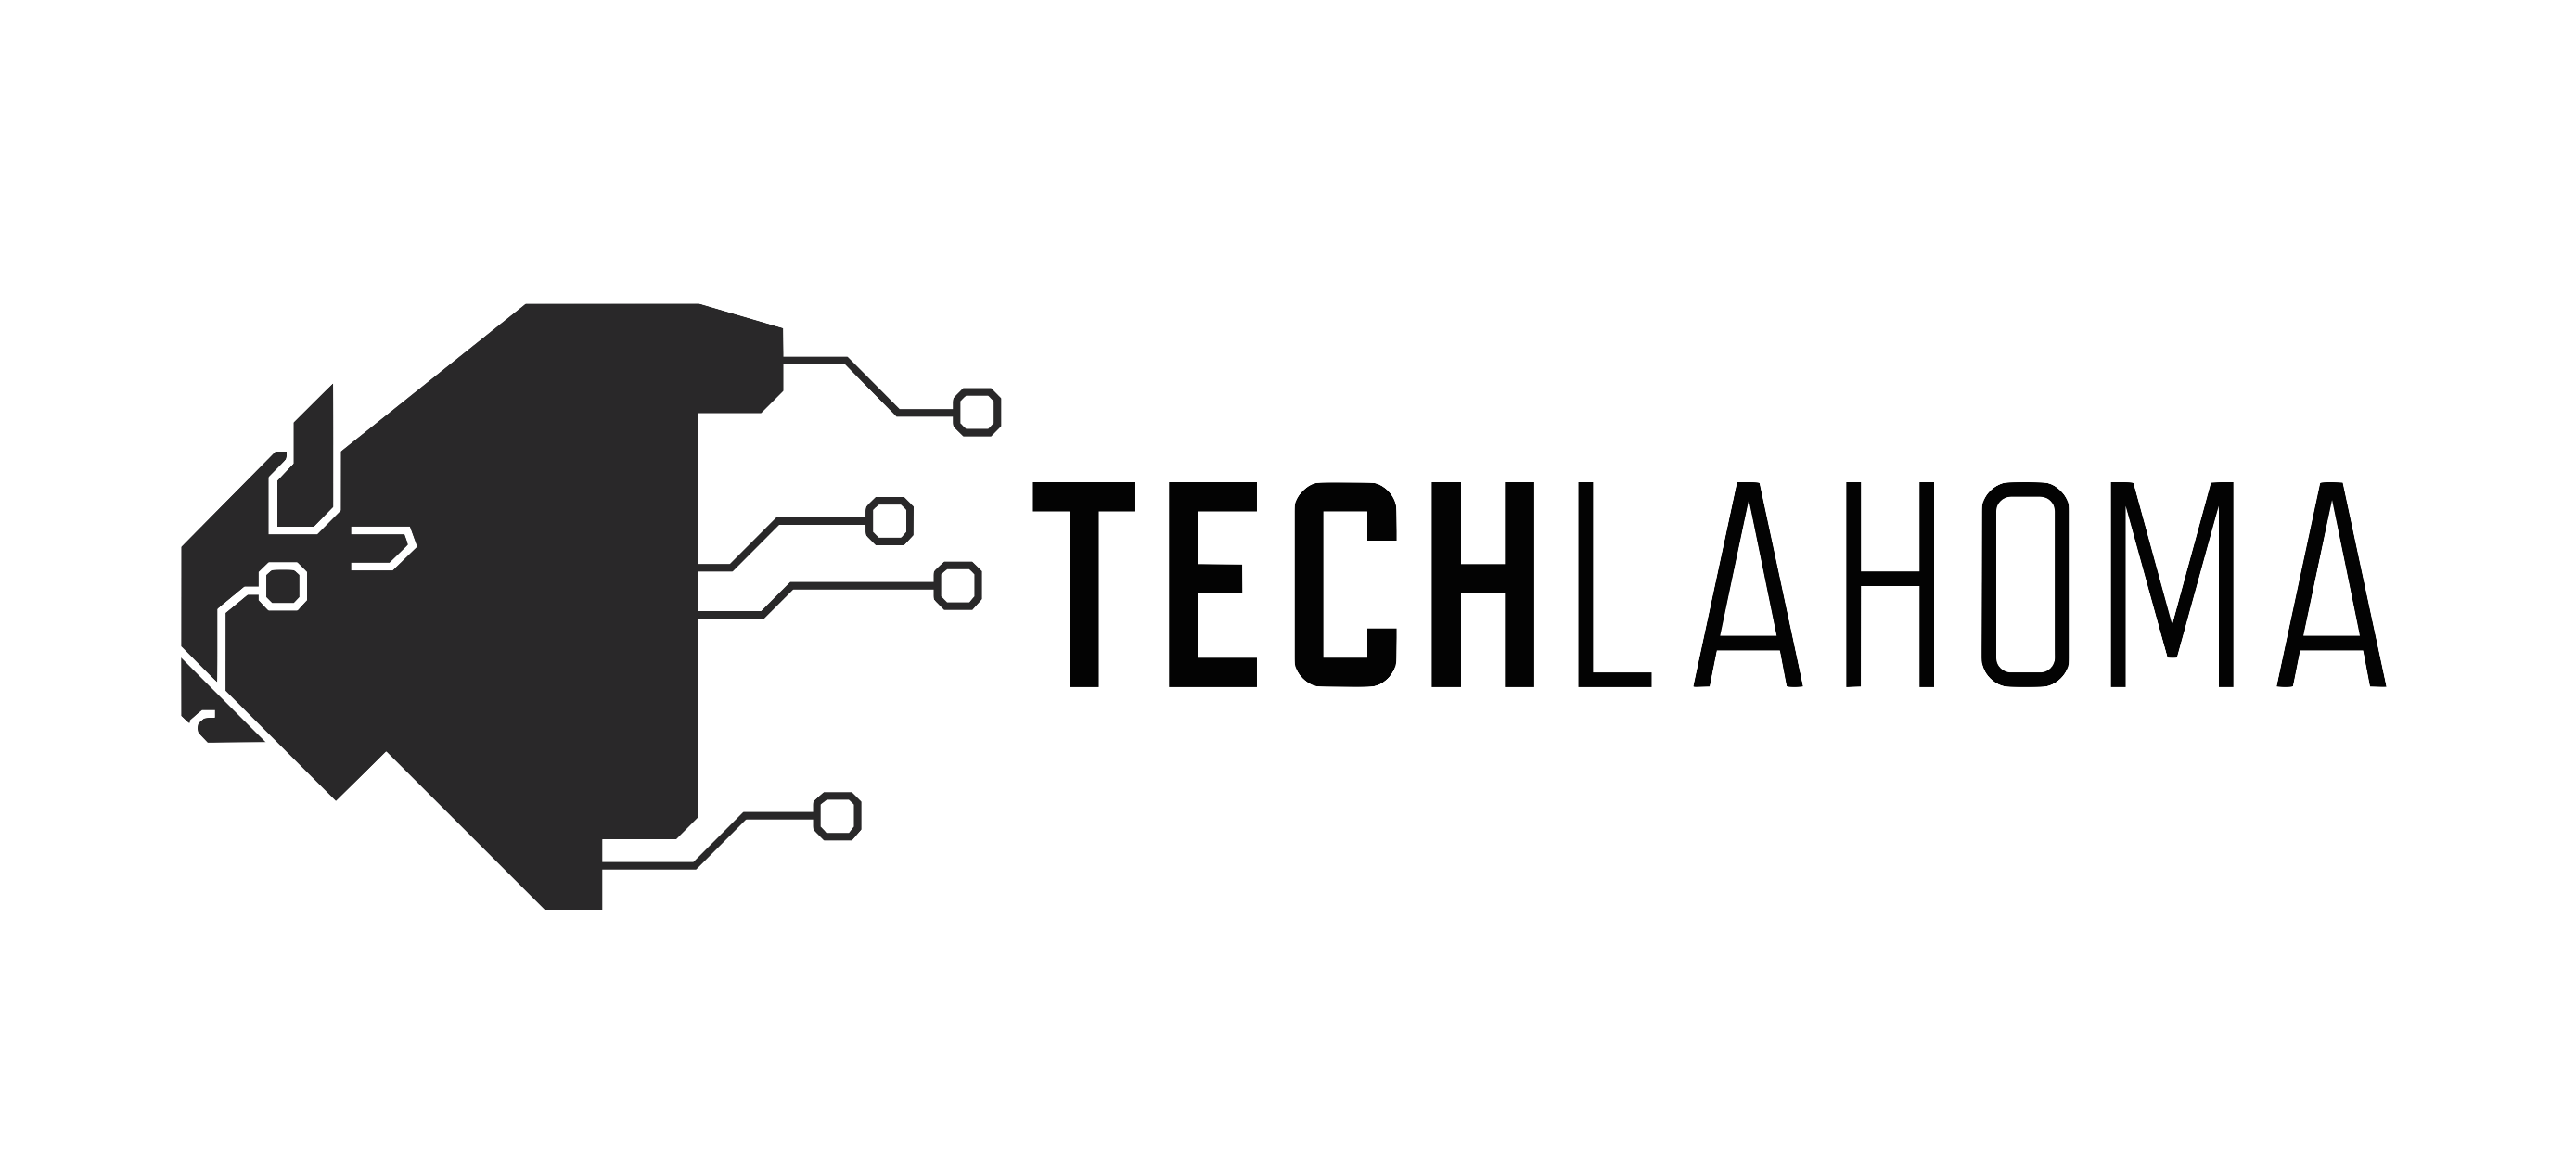 Techlahoma logo